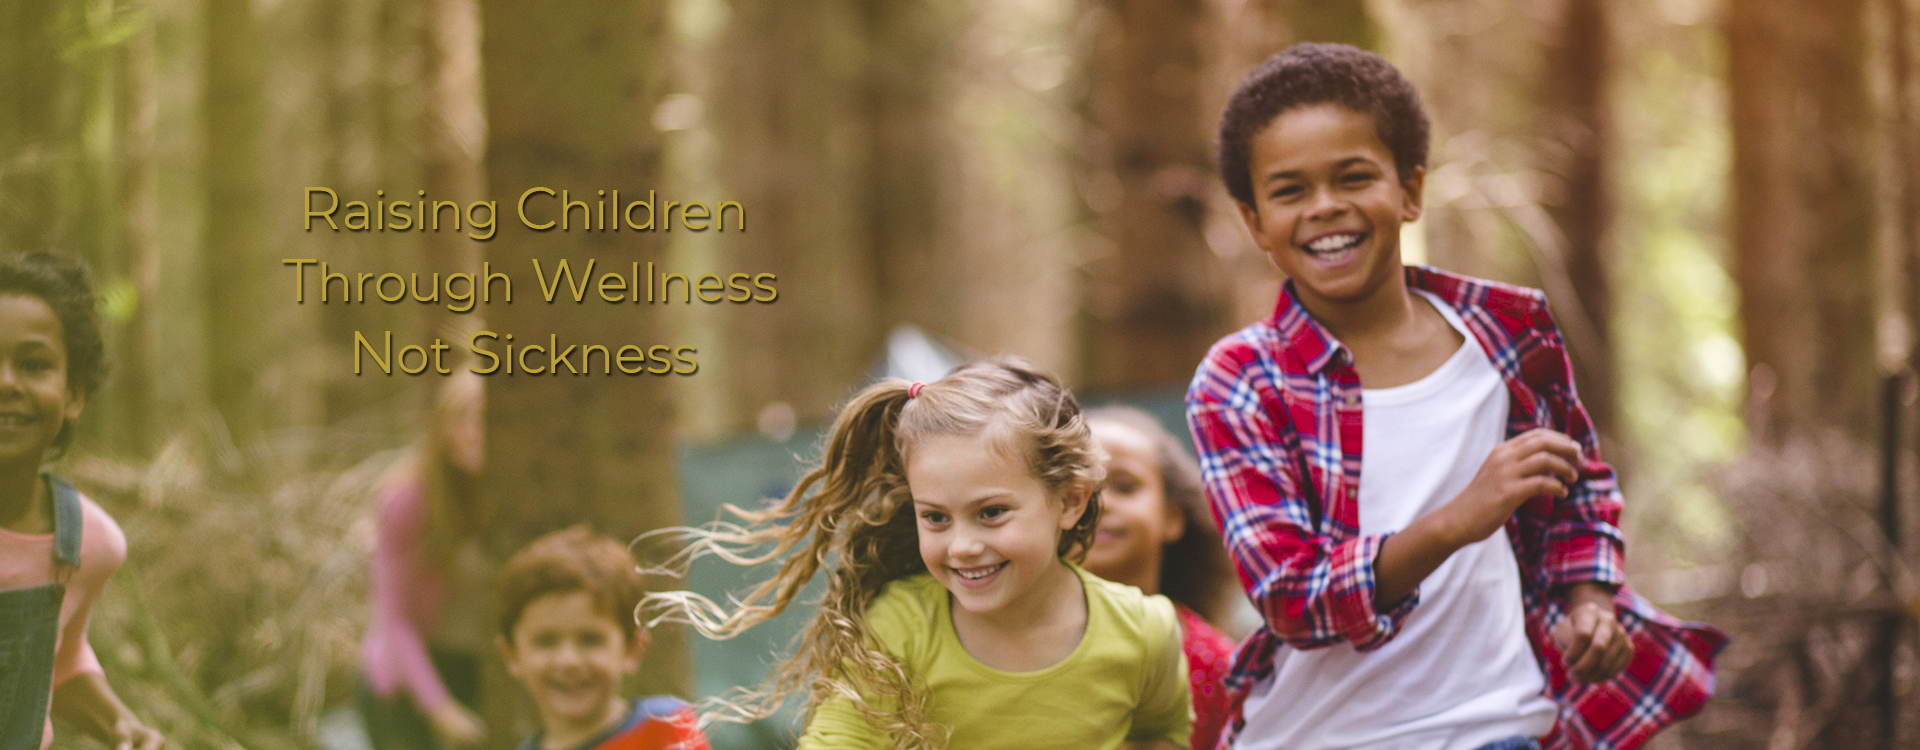 Raising Children Through Wellness